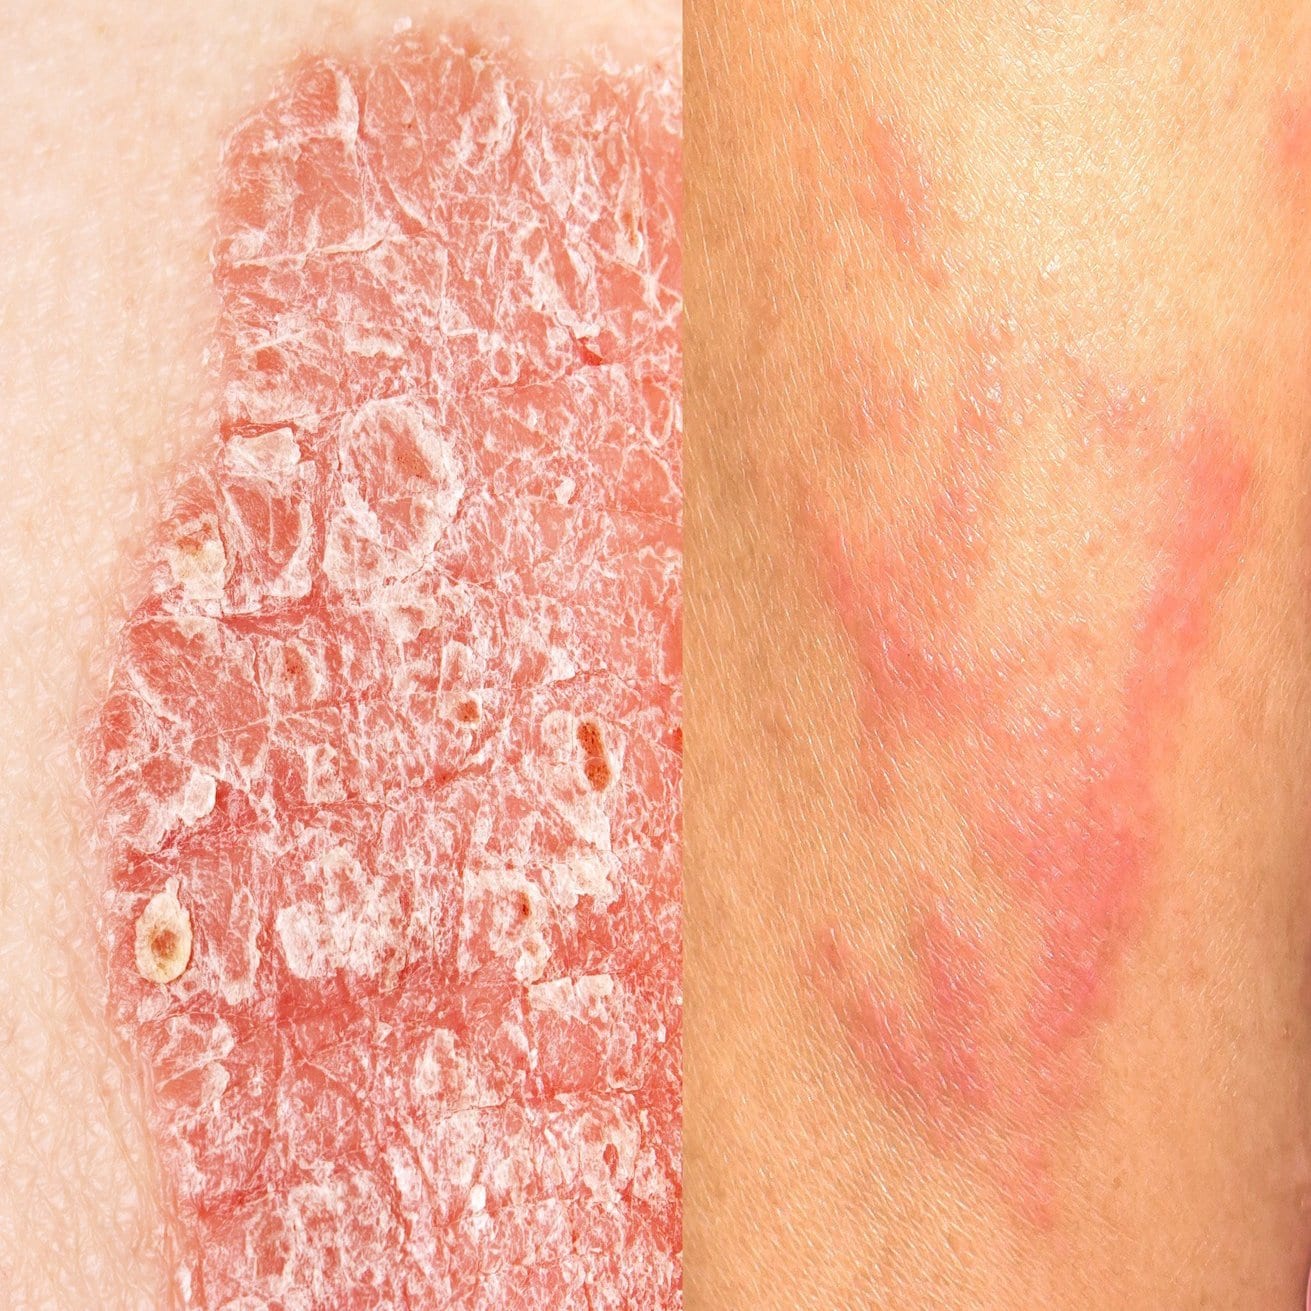 Psoriasis Vs Eczema